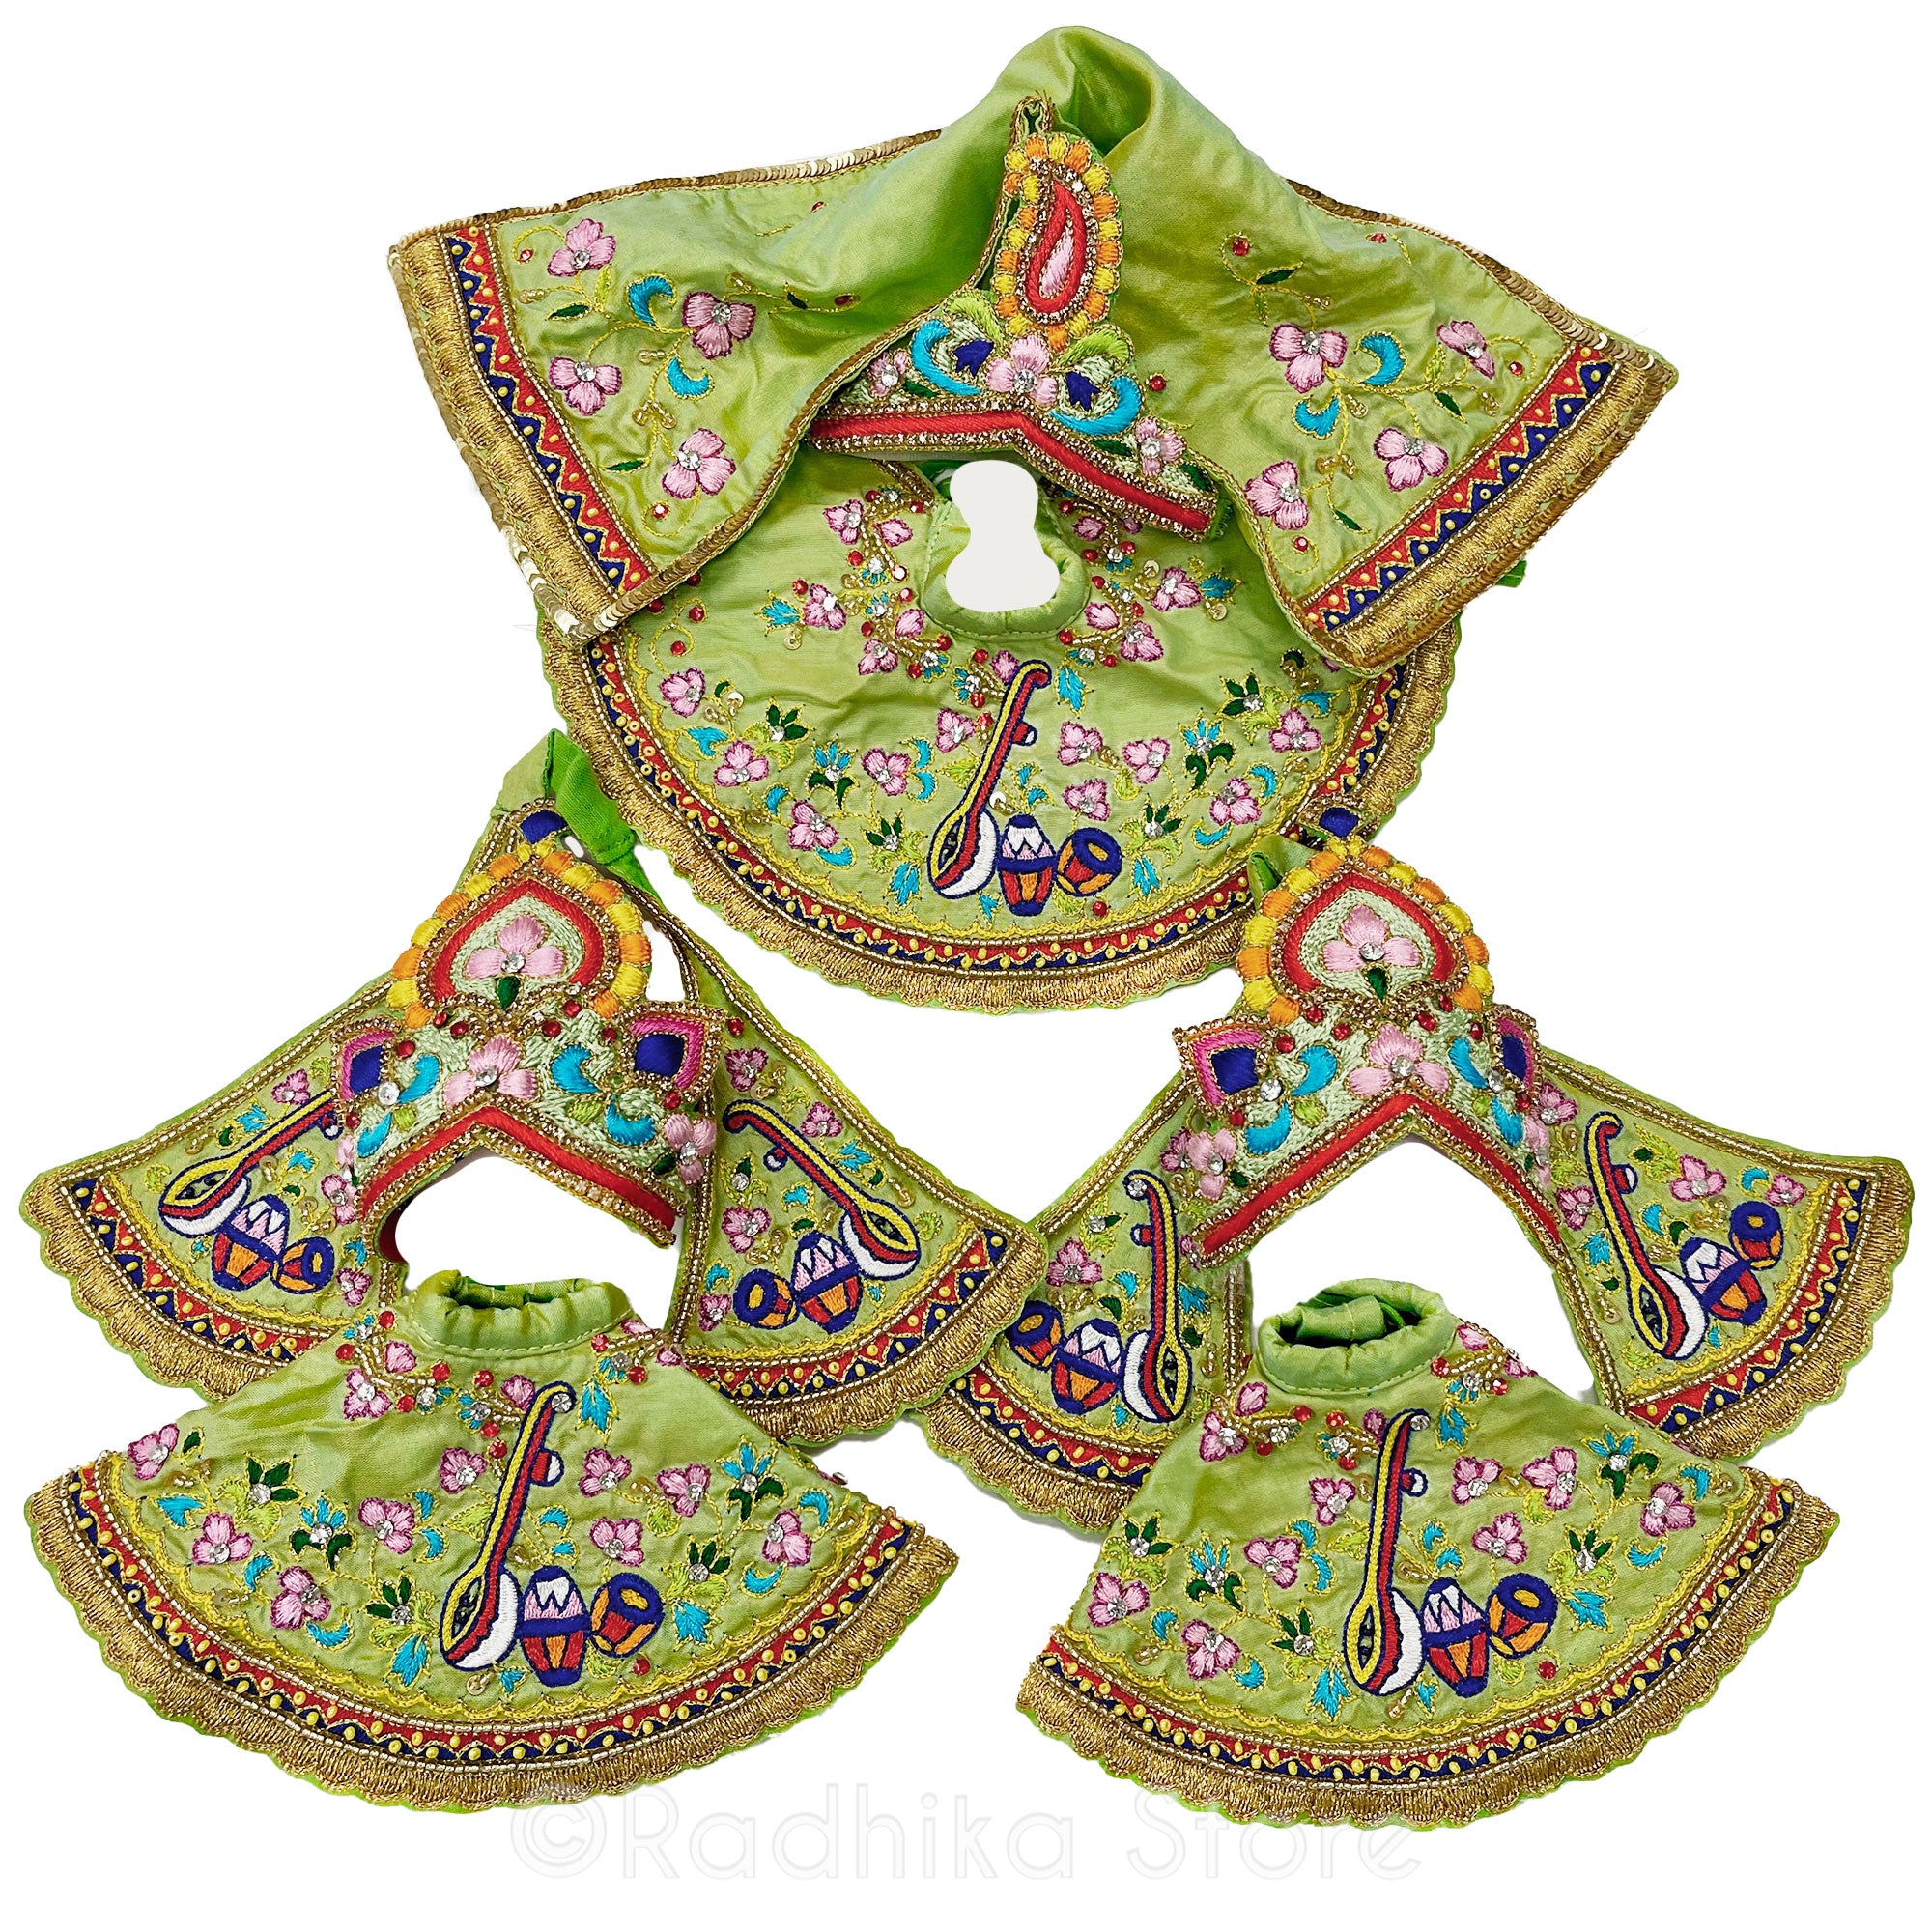 Divine Instruments - Sea Green - All Silk - Jagannath Baladeva Subhadra Deity Outfit